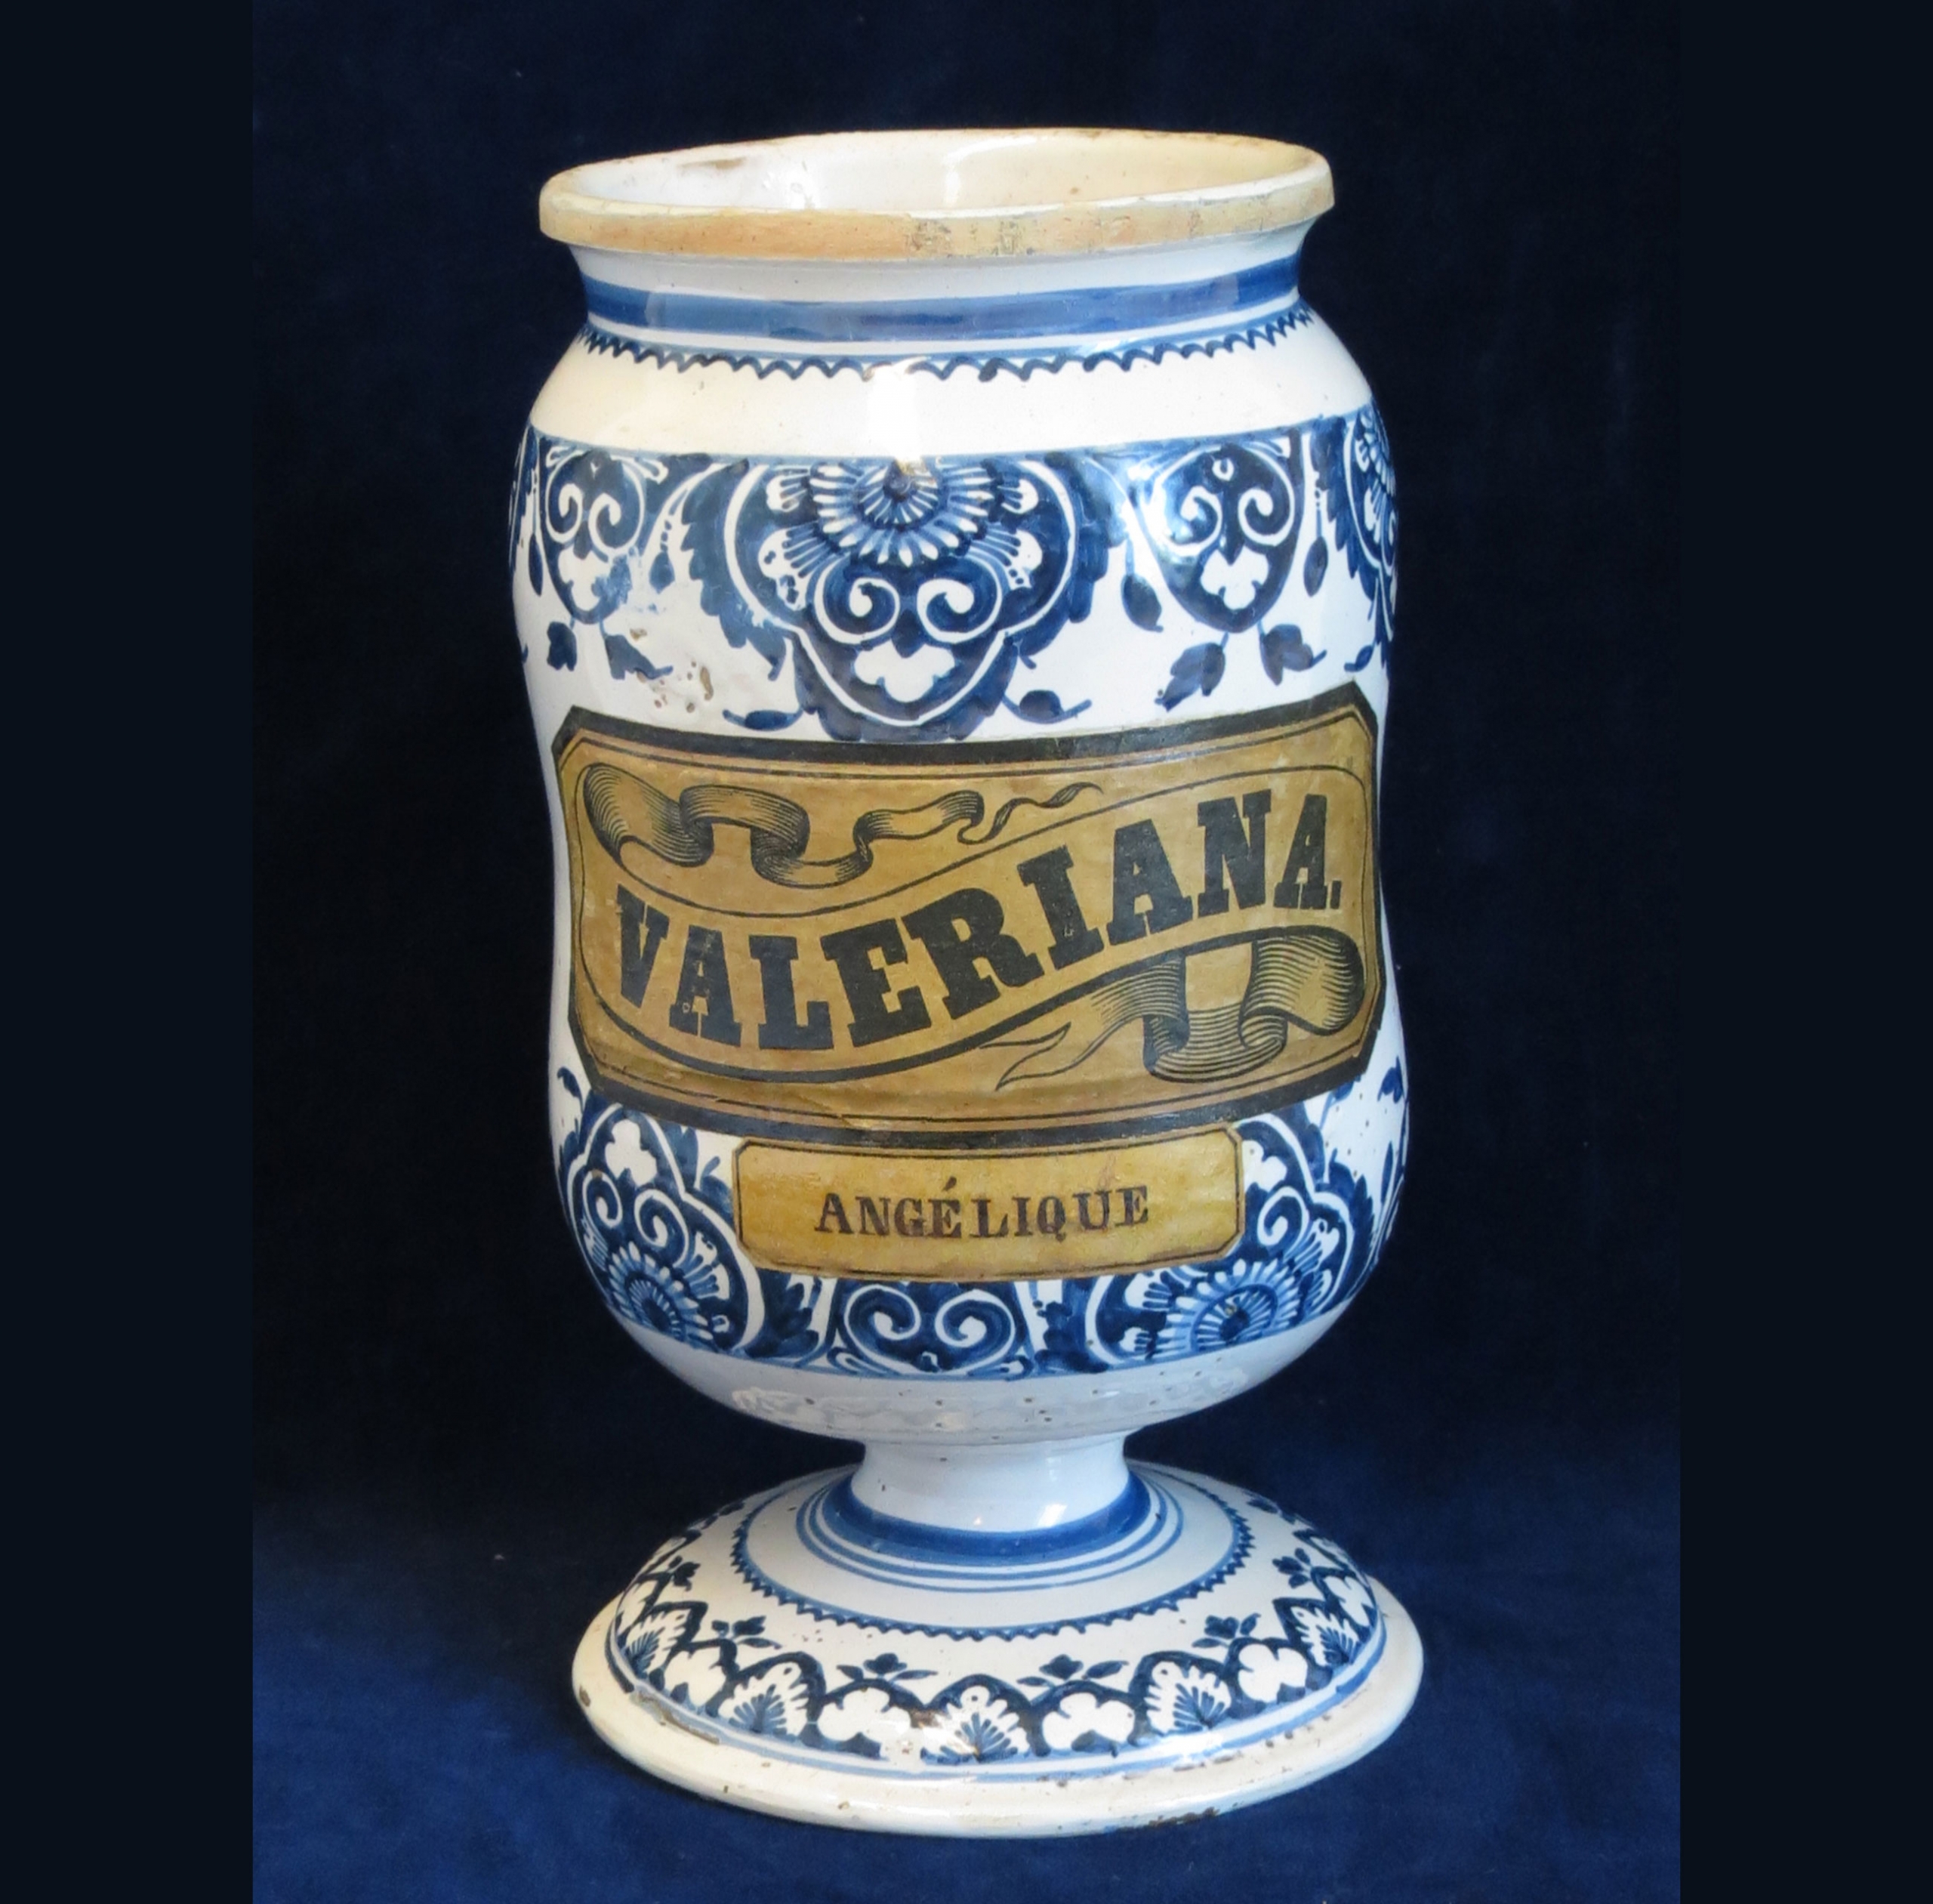 Photo of antique pharmacy pot made of blue and white ceramic. Label reads 'Valeriana - Angélique'